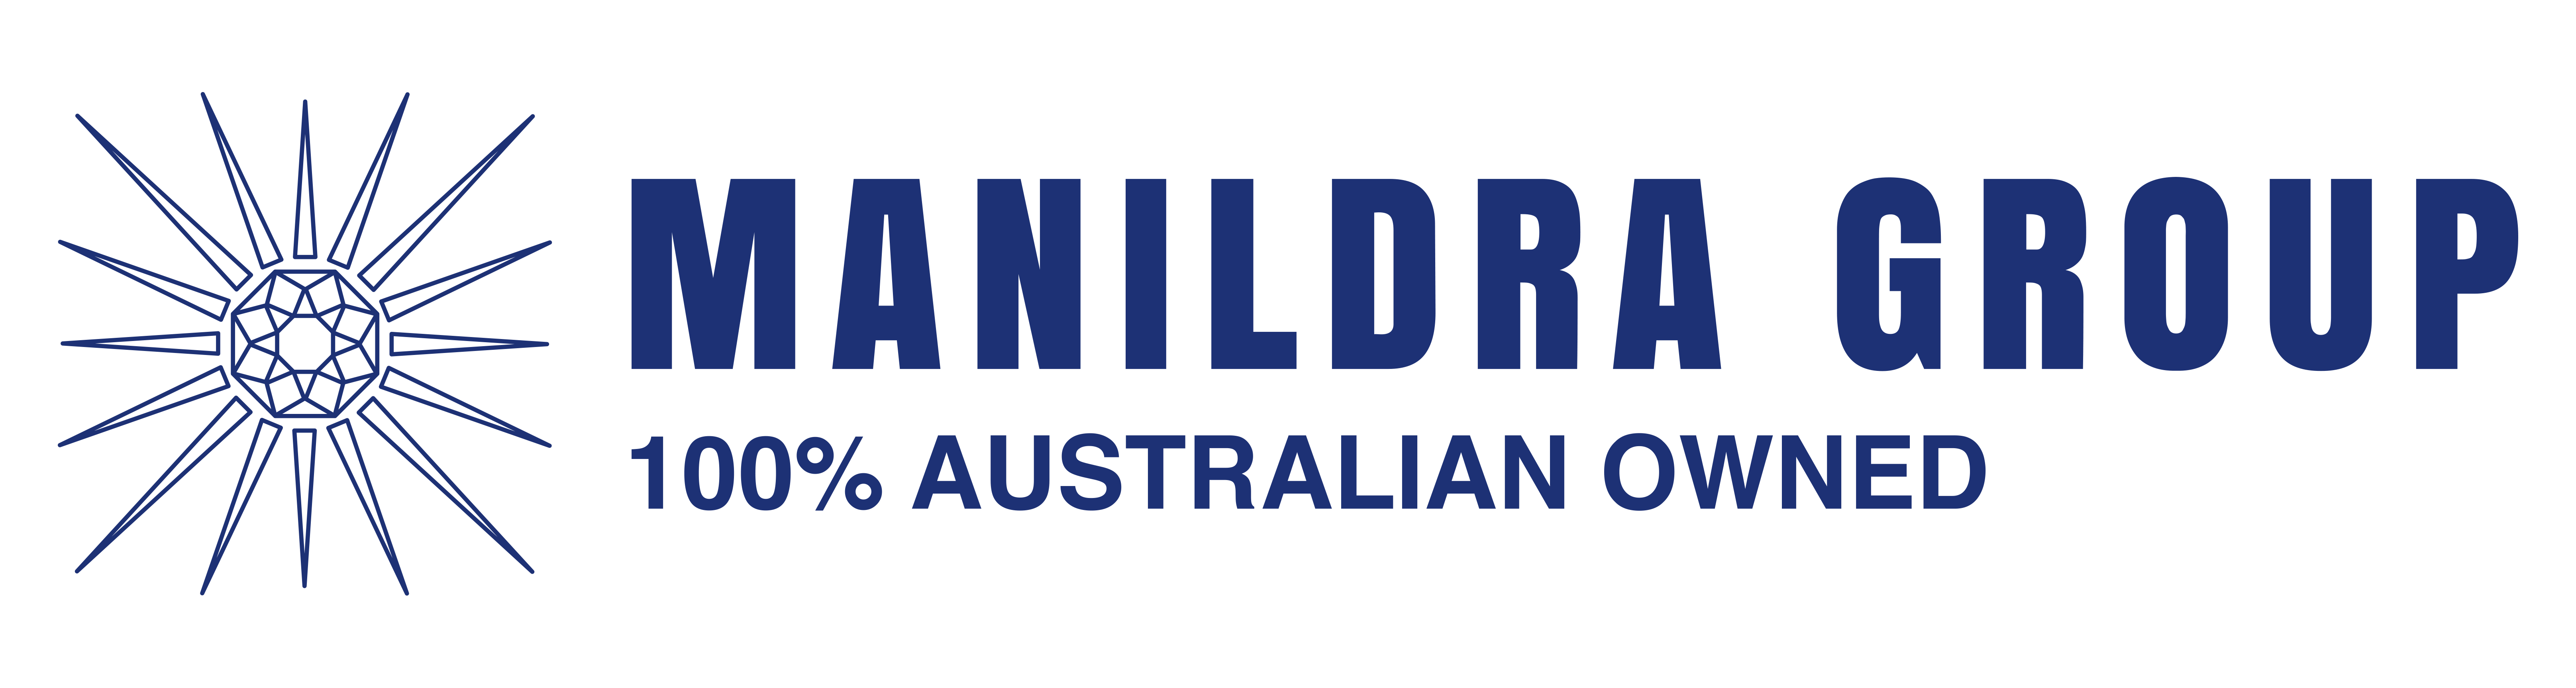 Manildra Group Logo